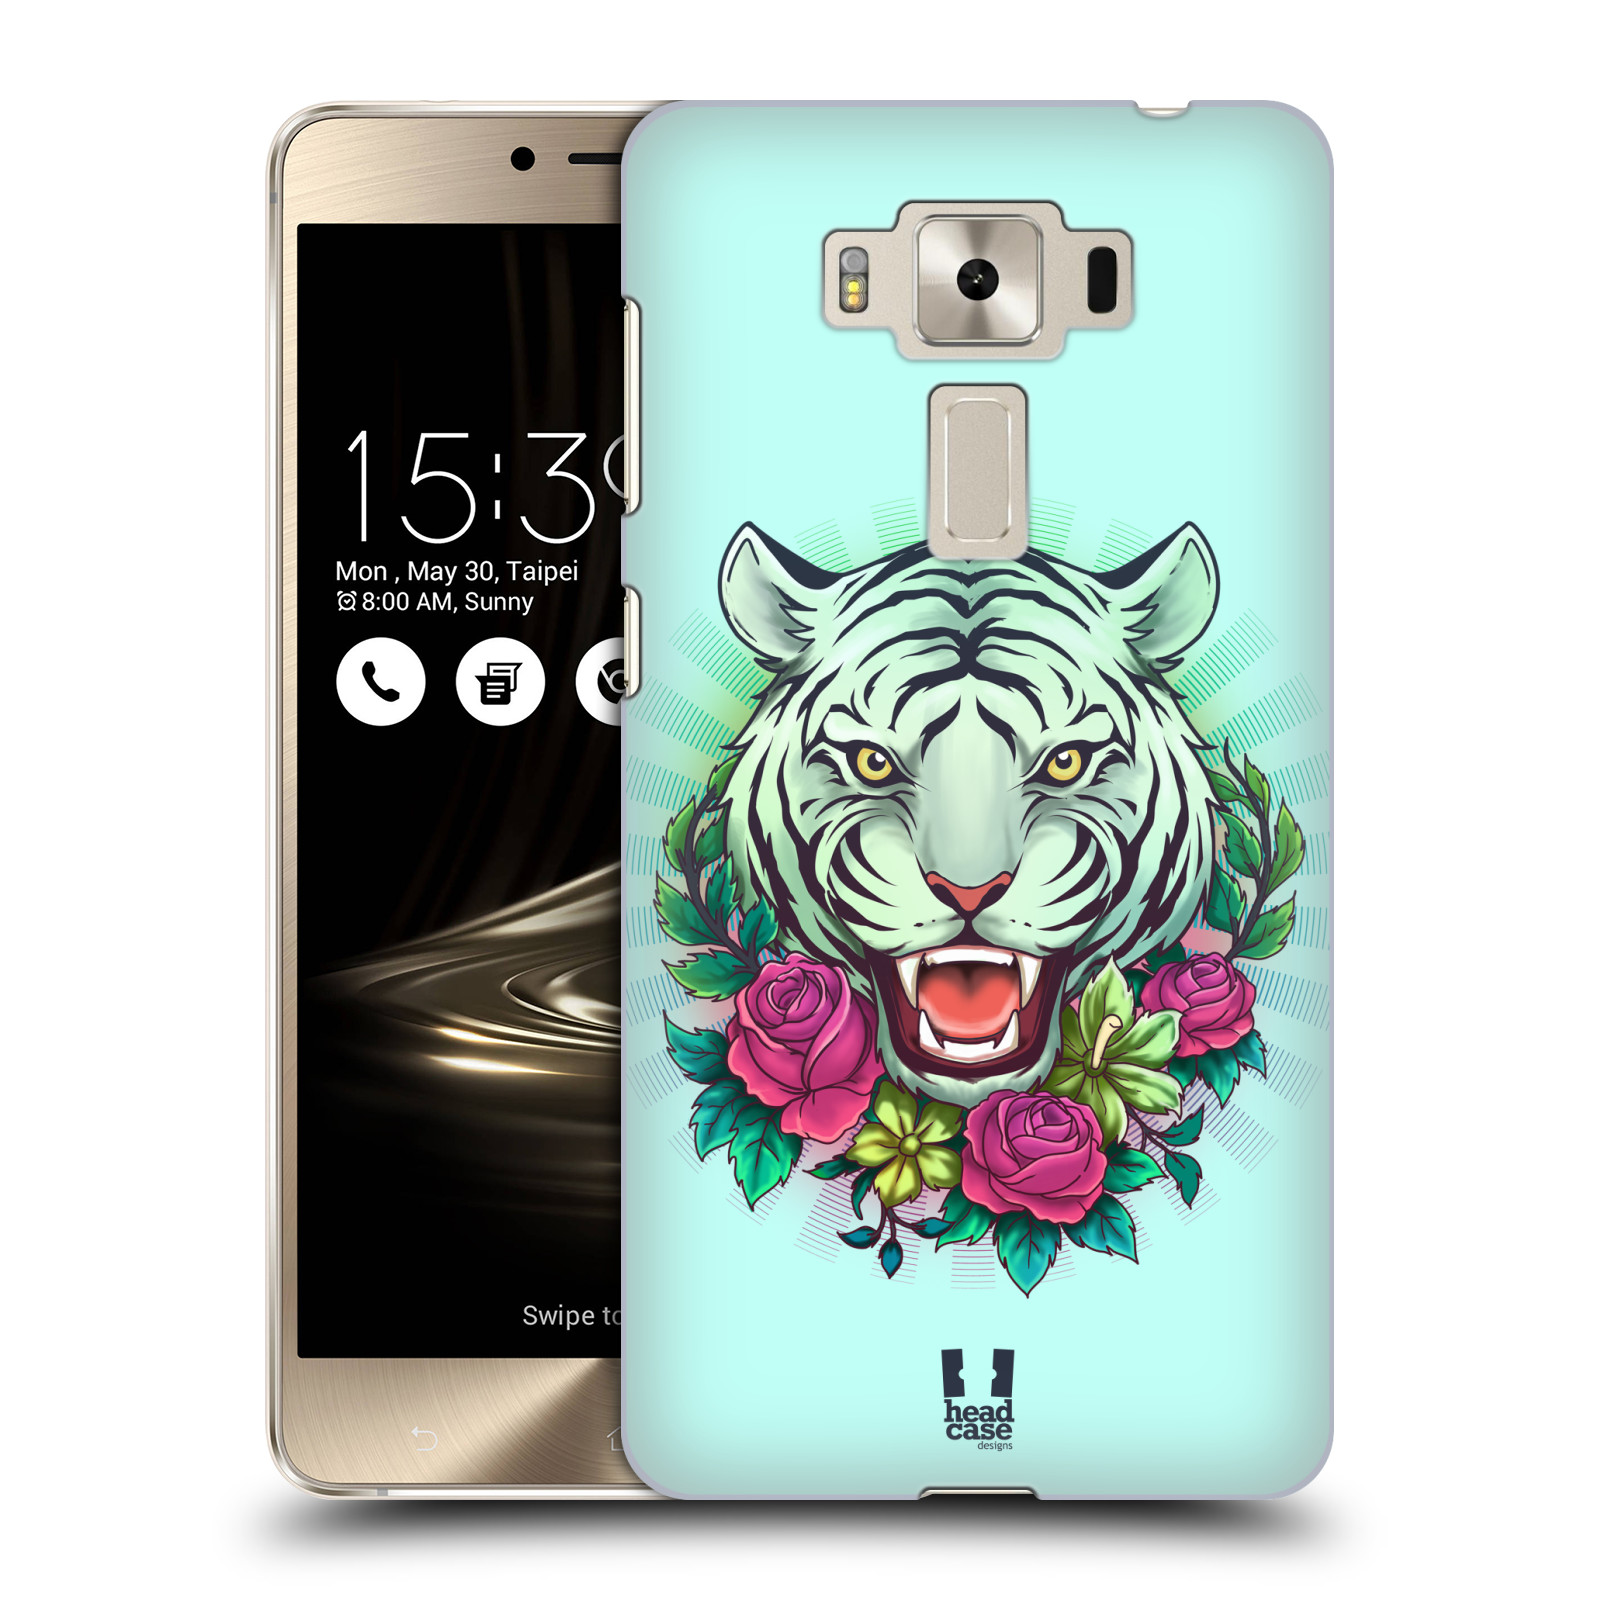 HEAD CASE plastový obal na mobil Asus Zenfone 3 DELUXE ZS550KL vzor Flóra a Fauna tygr